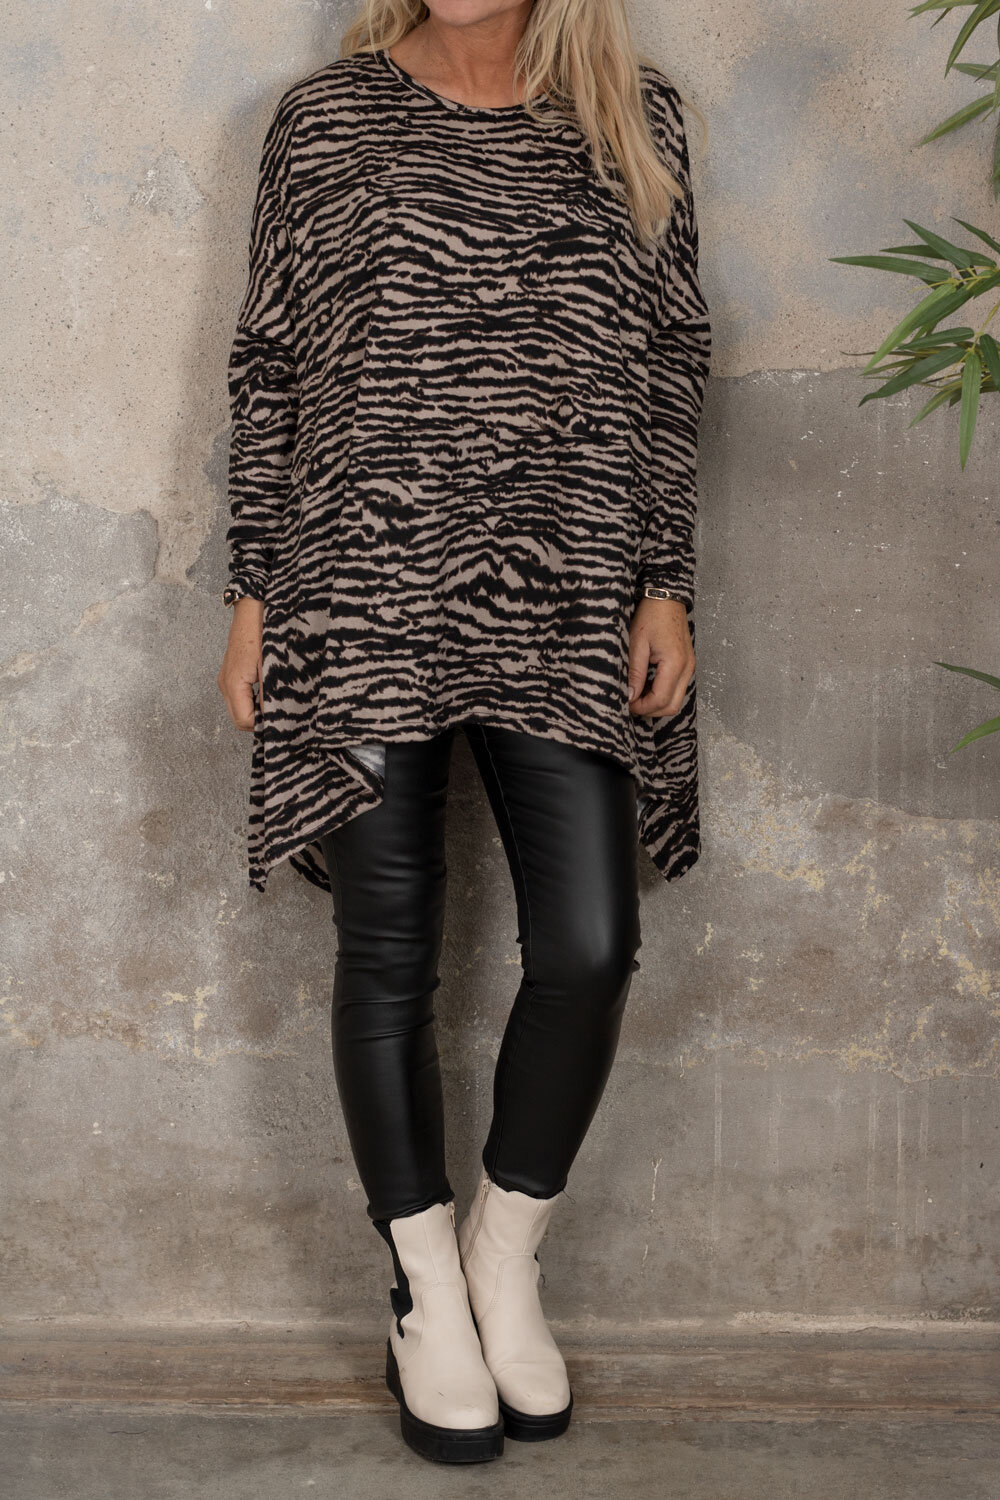 Elicia Oversize Sweater - Zebra -Beige